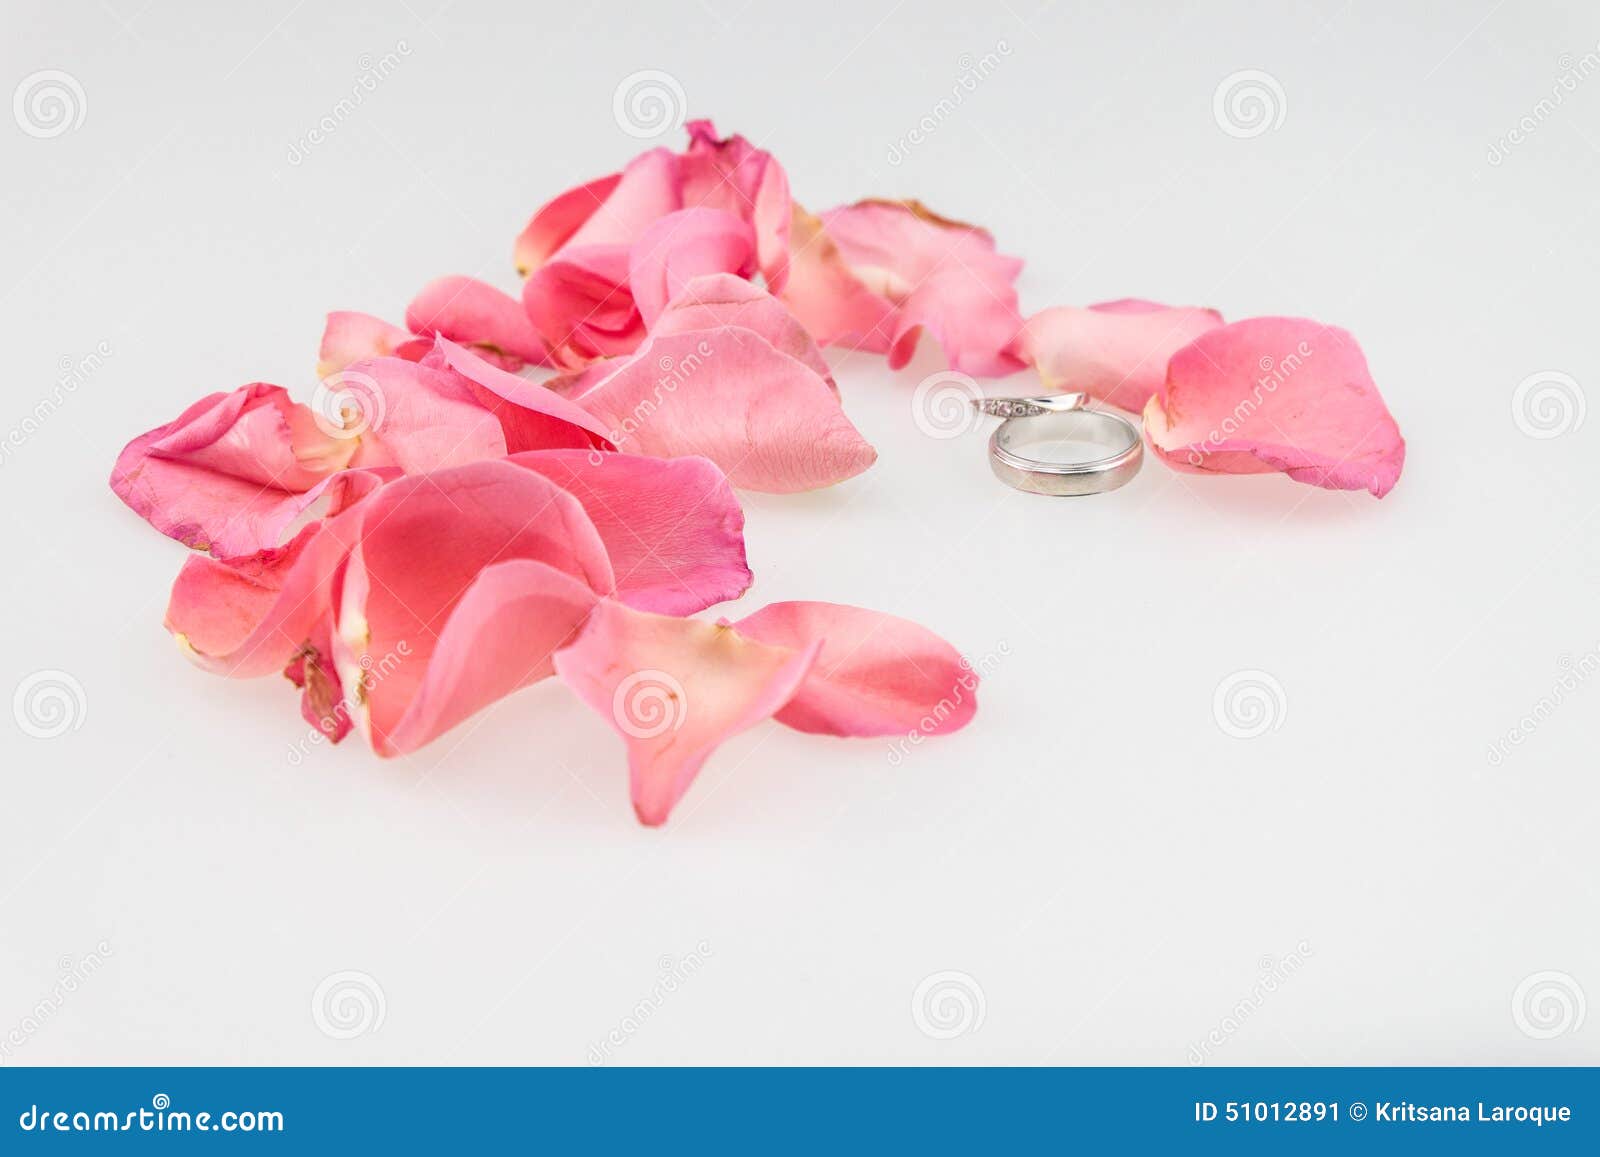 wedding rings on single rose petal